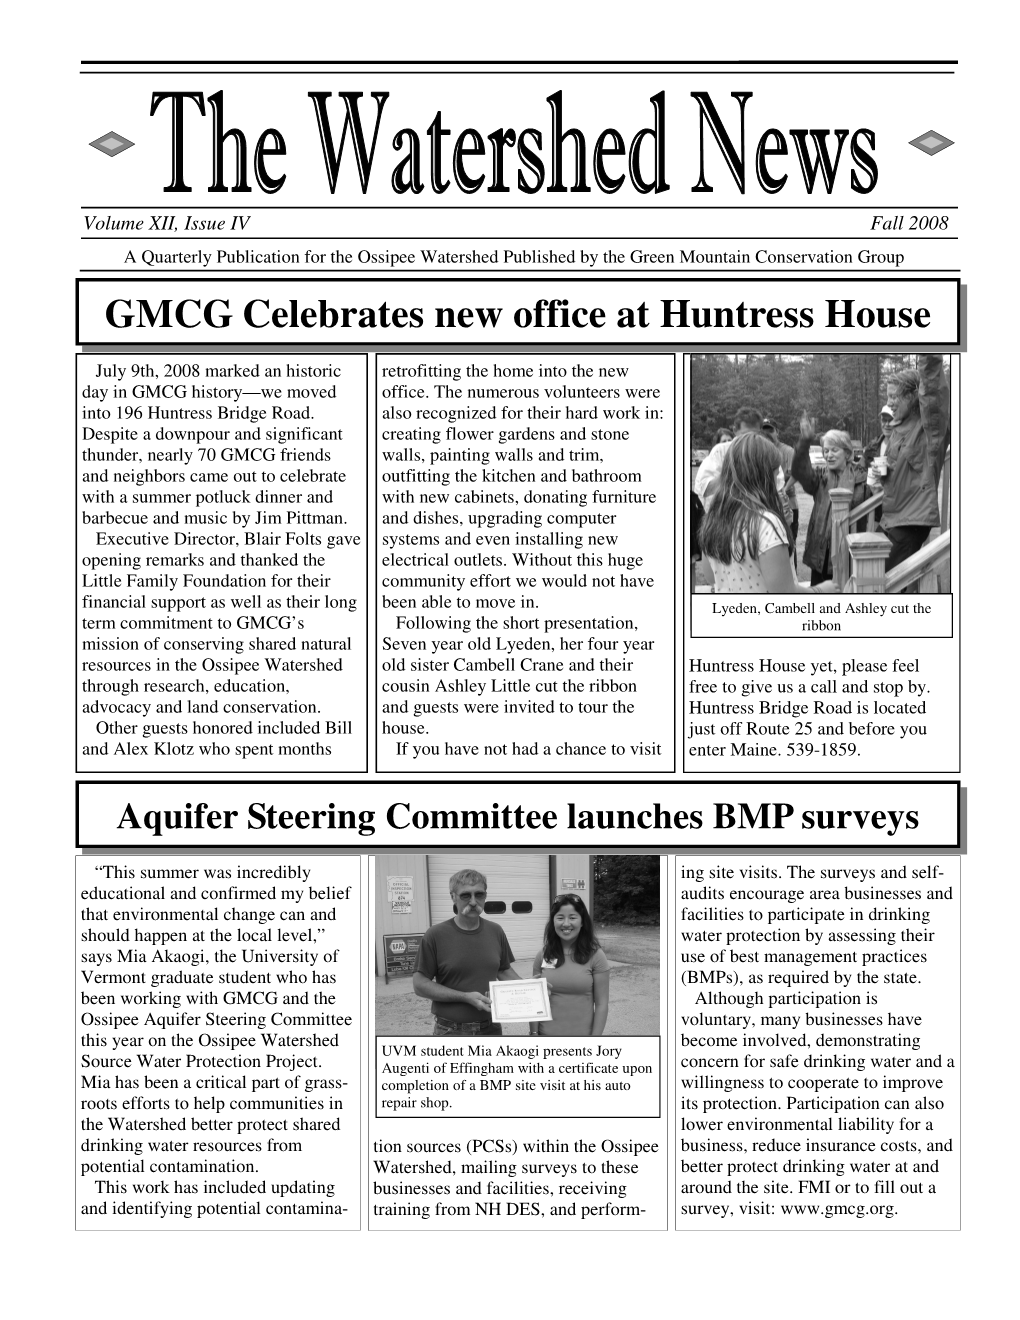 GMCG Celebrates New Office at Huntress House